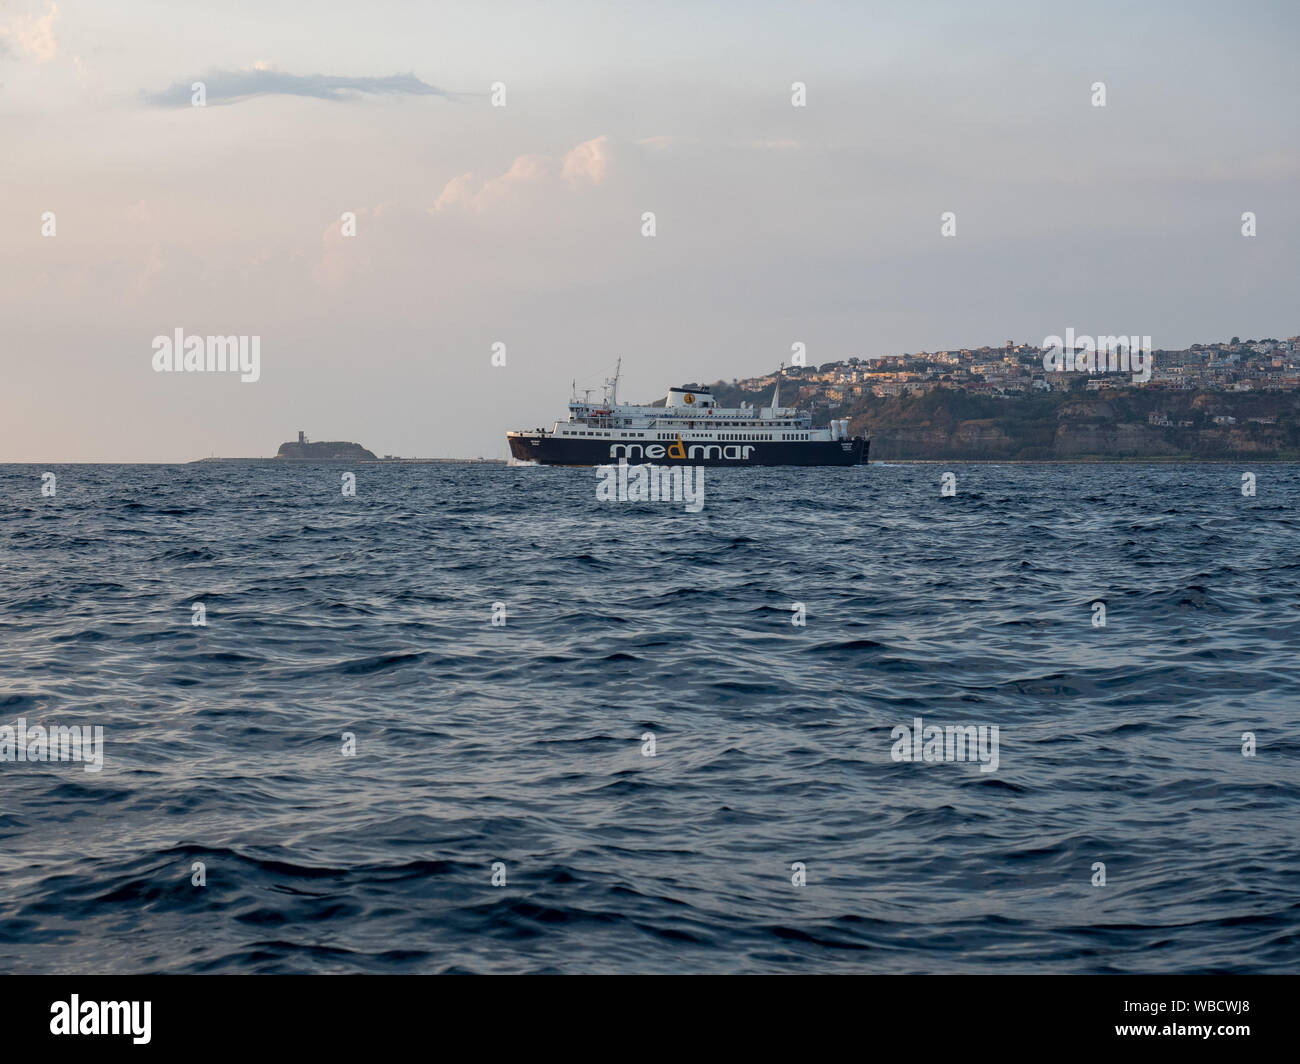 Medmar vessel, Benito Buono Stock Photo